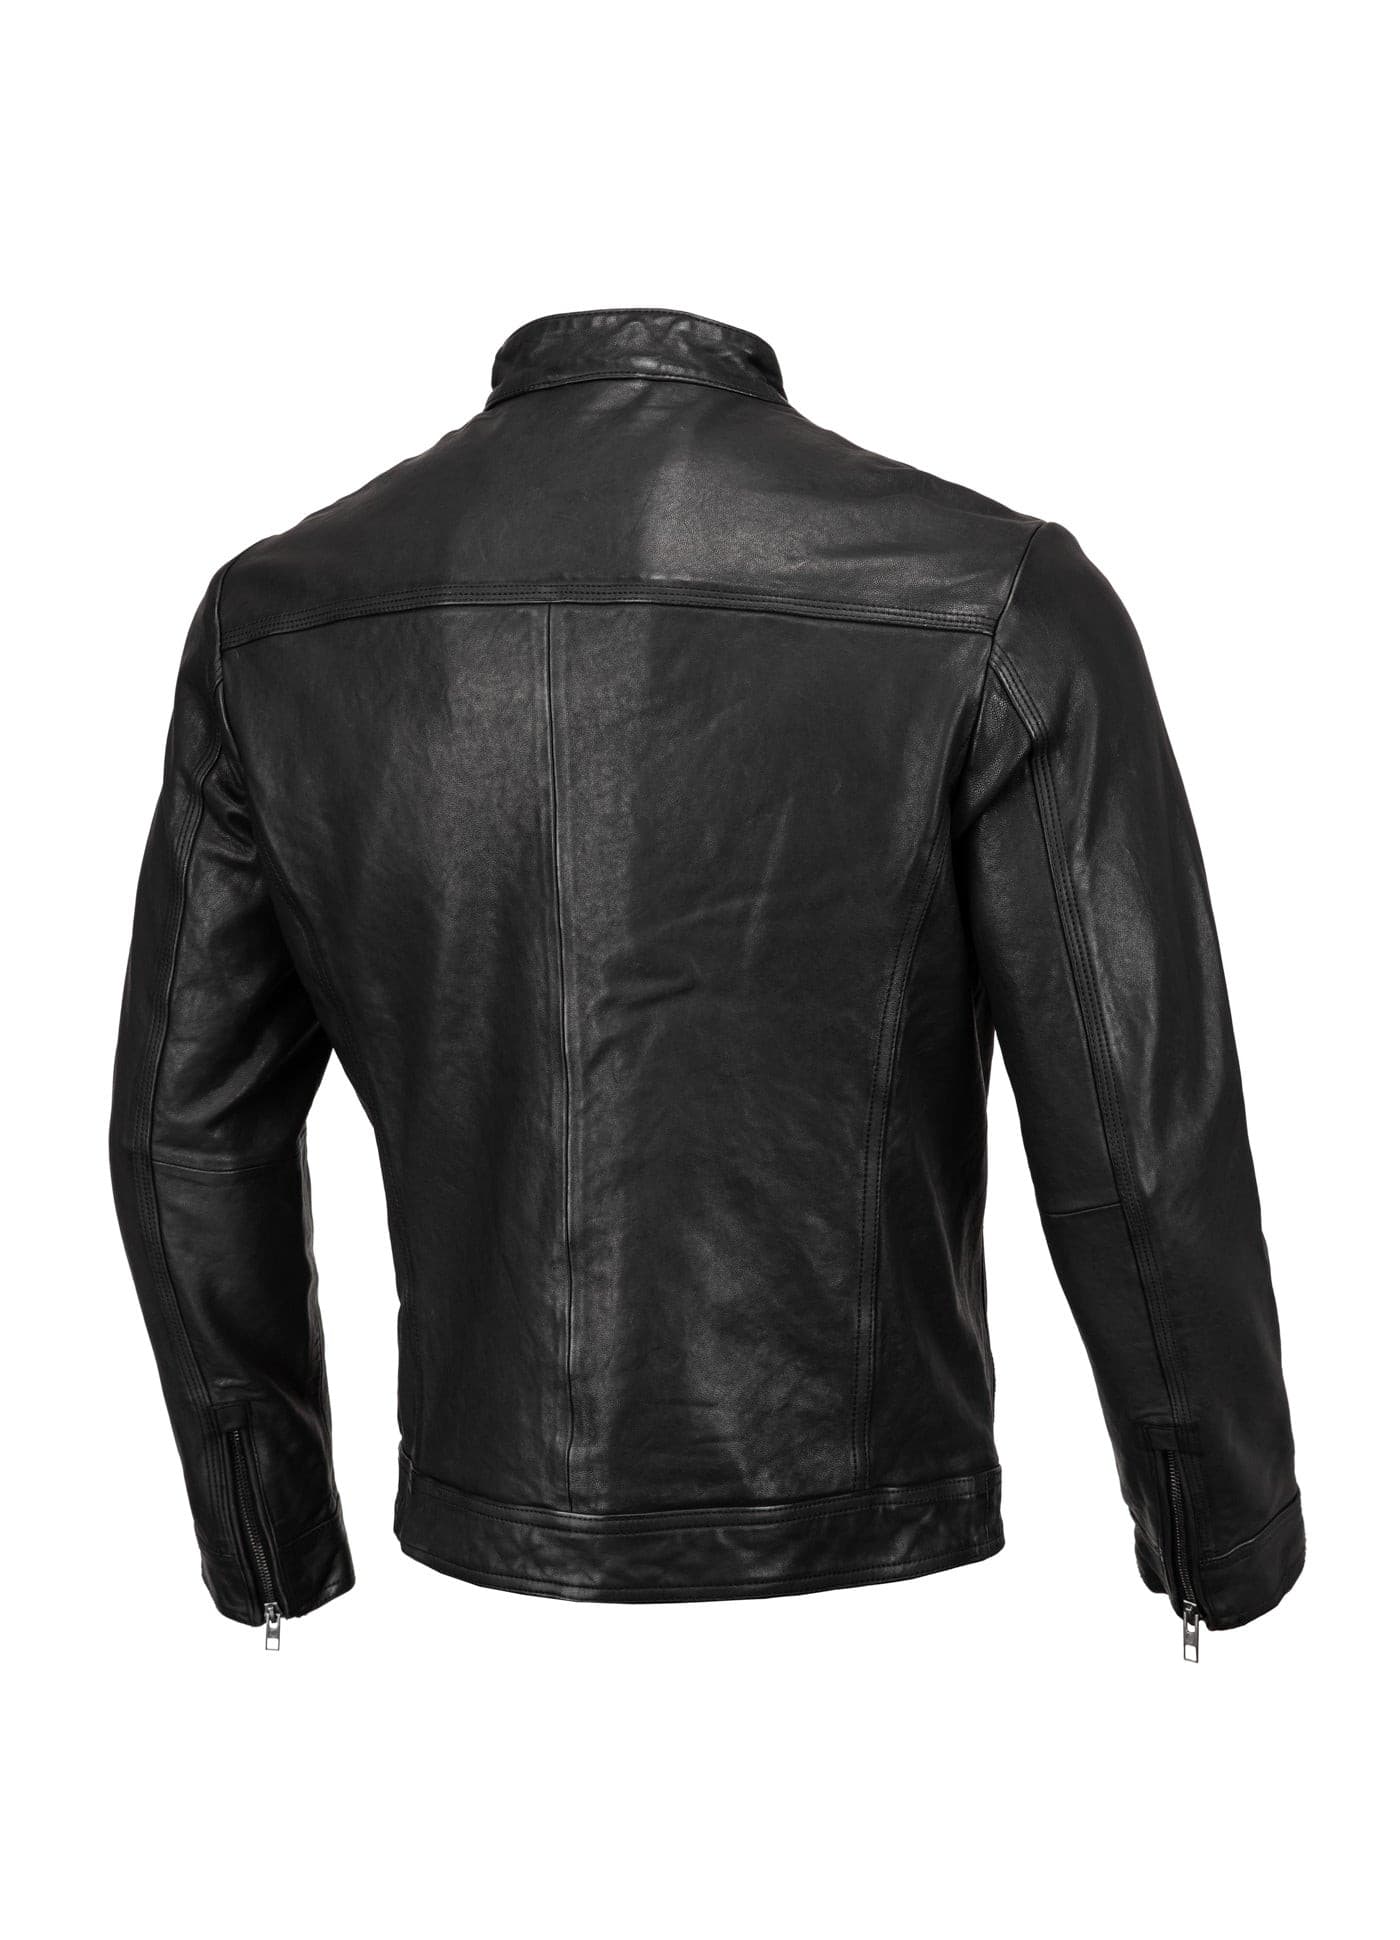 HOOPER Black Leather Jacket